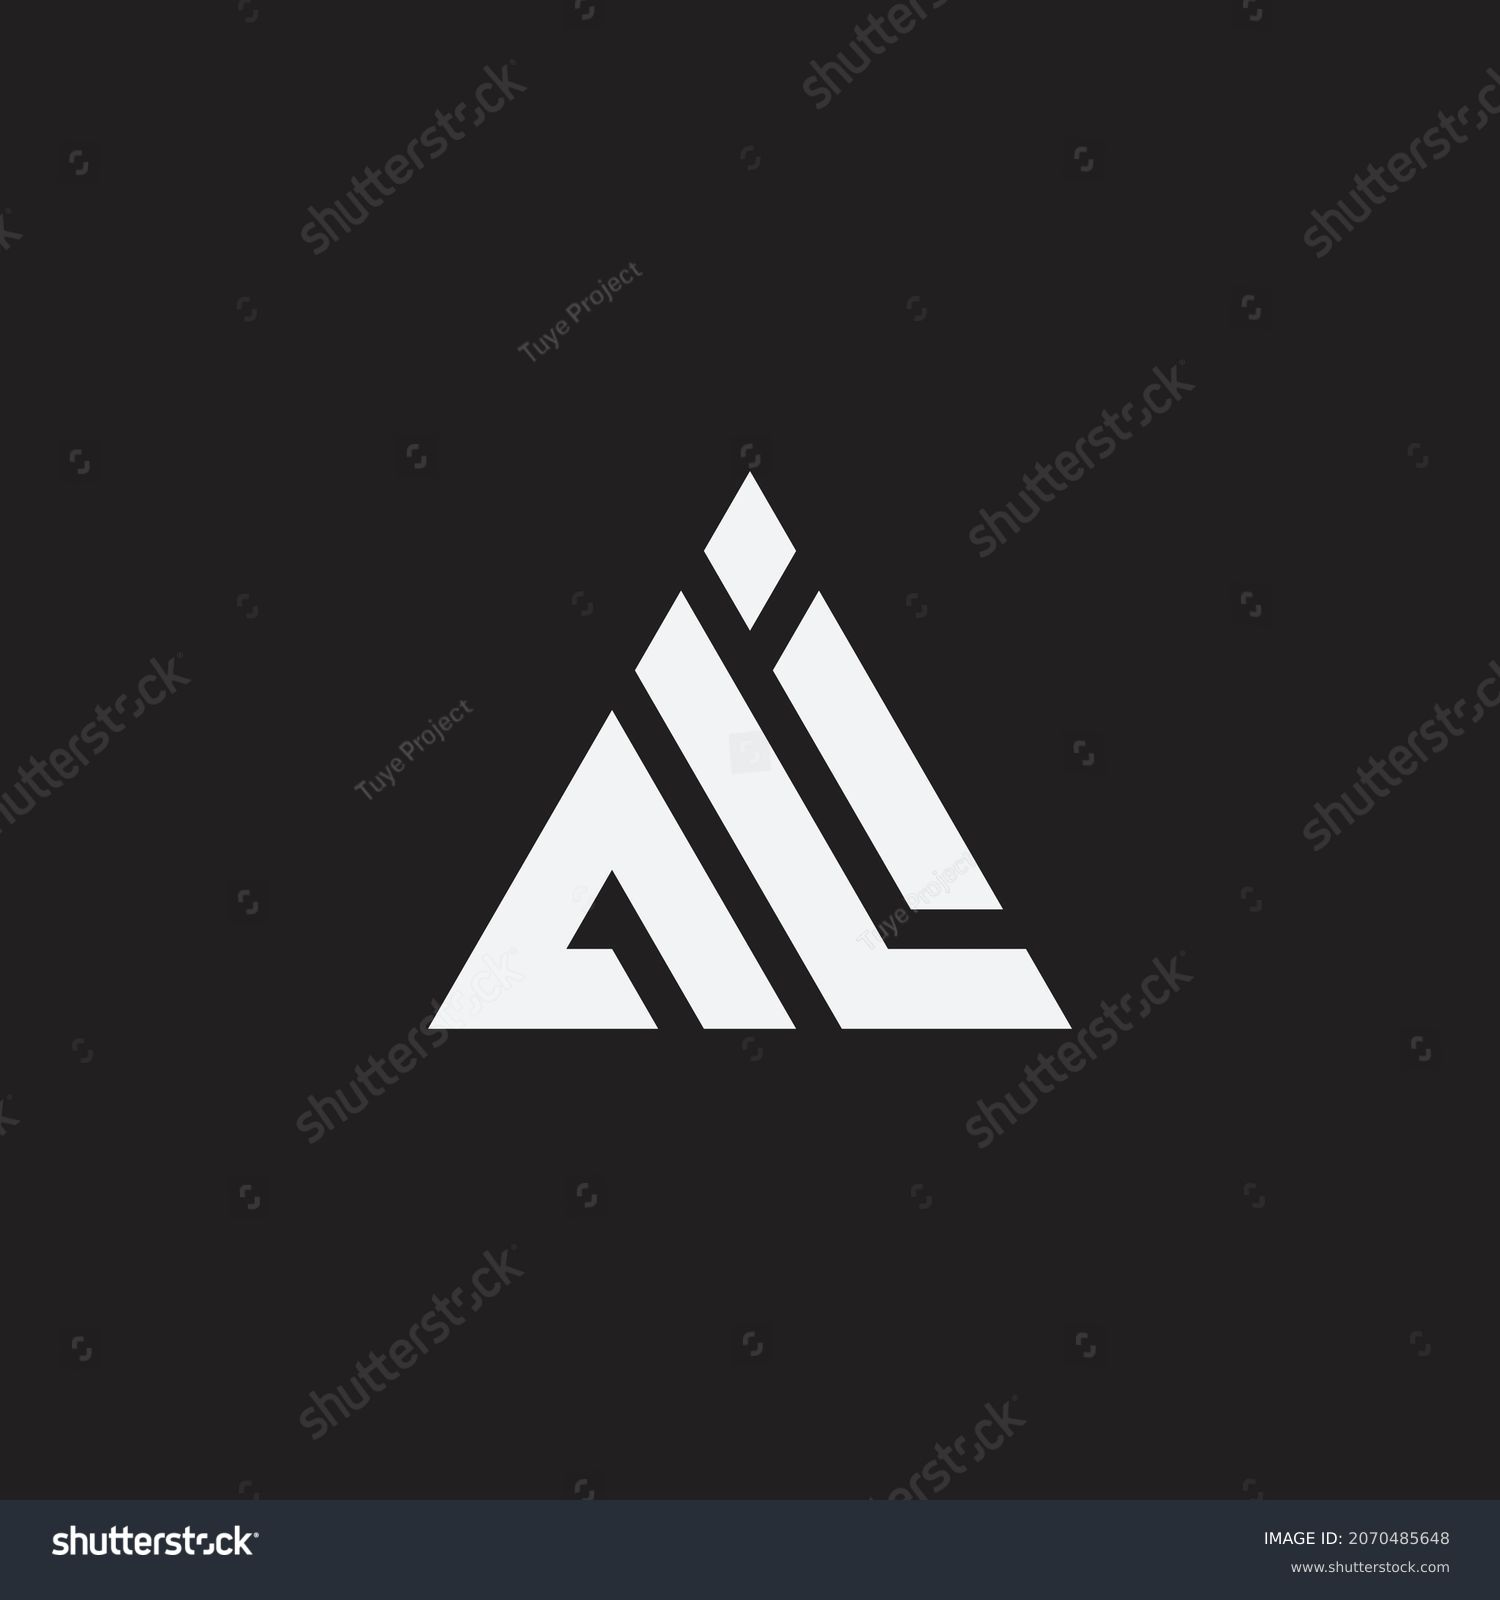 925 Ali logo Images, Stock Photos & Vectors | Shutterstock